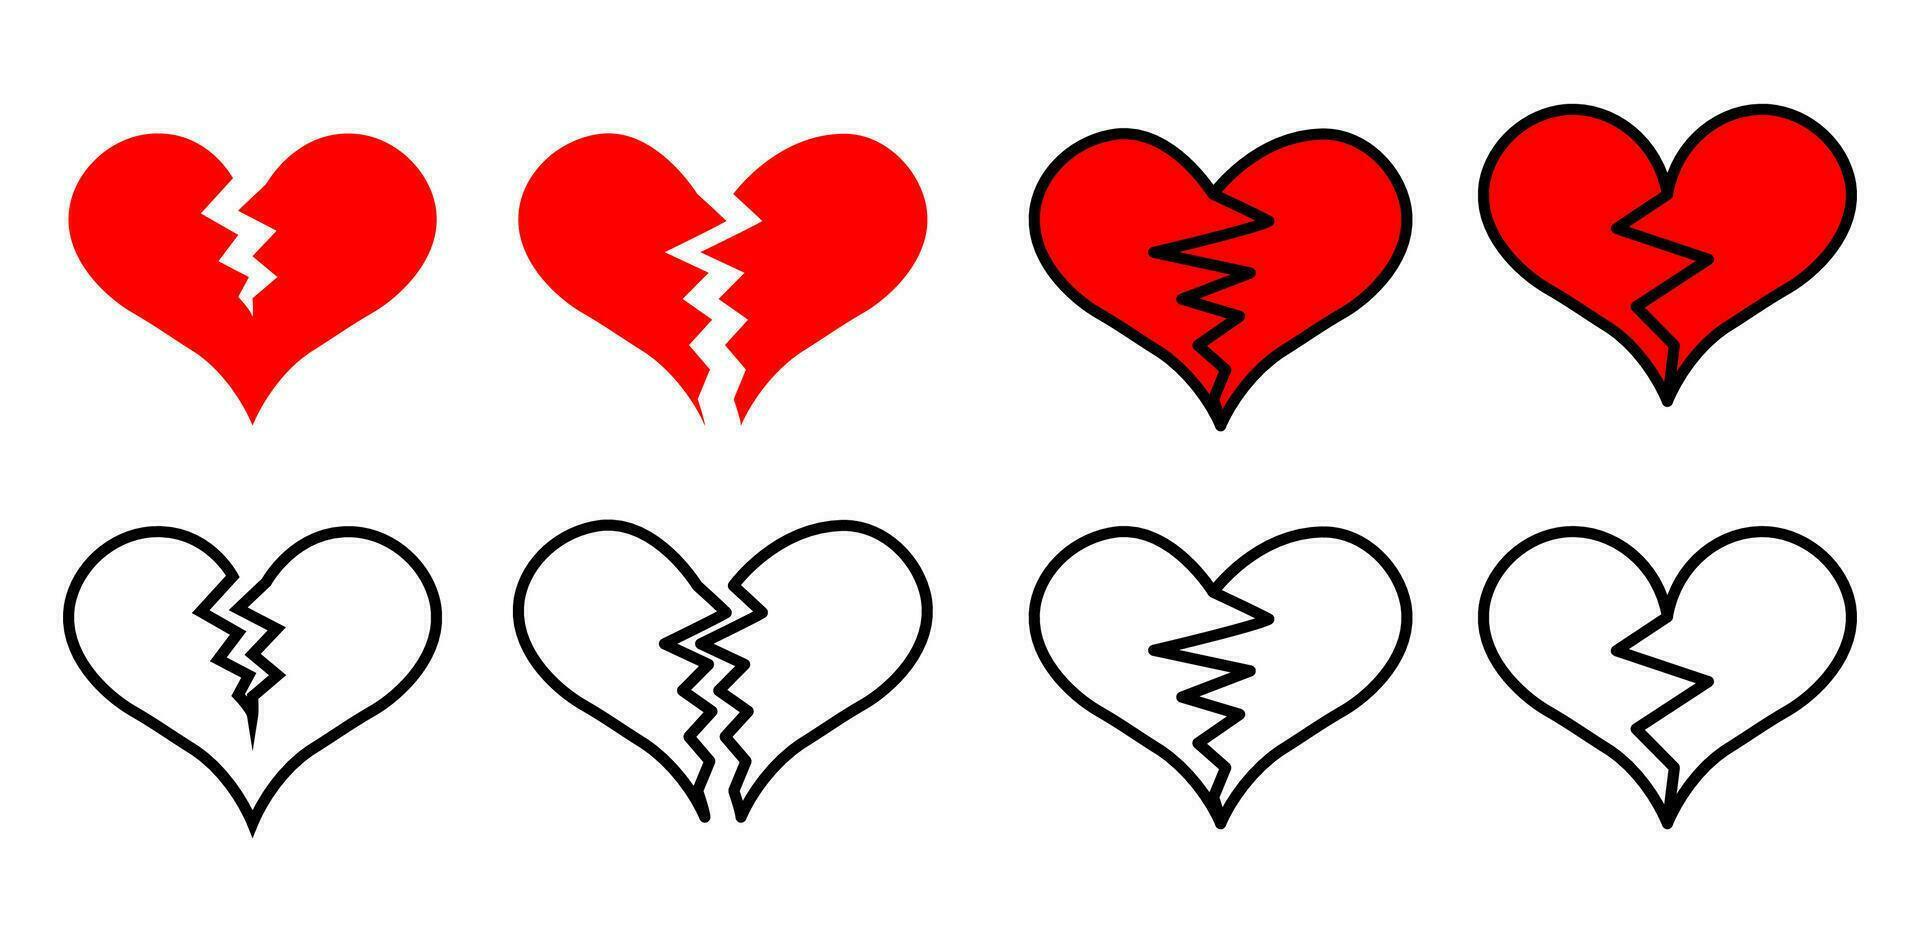 Broken heart icon on set. Vector illustration.